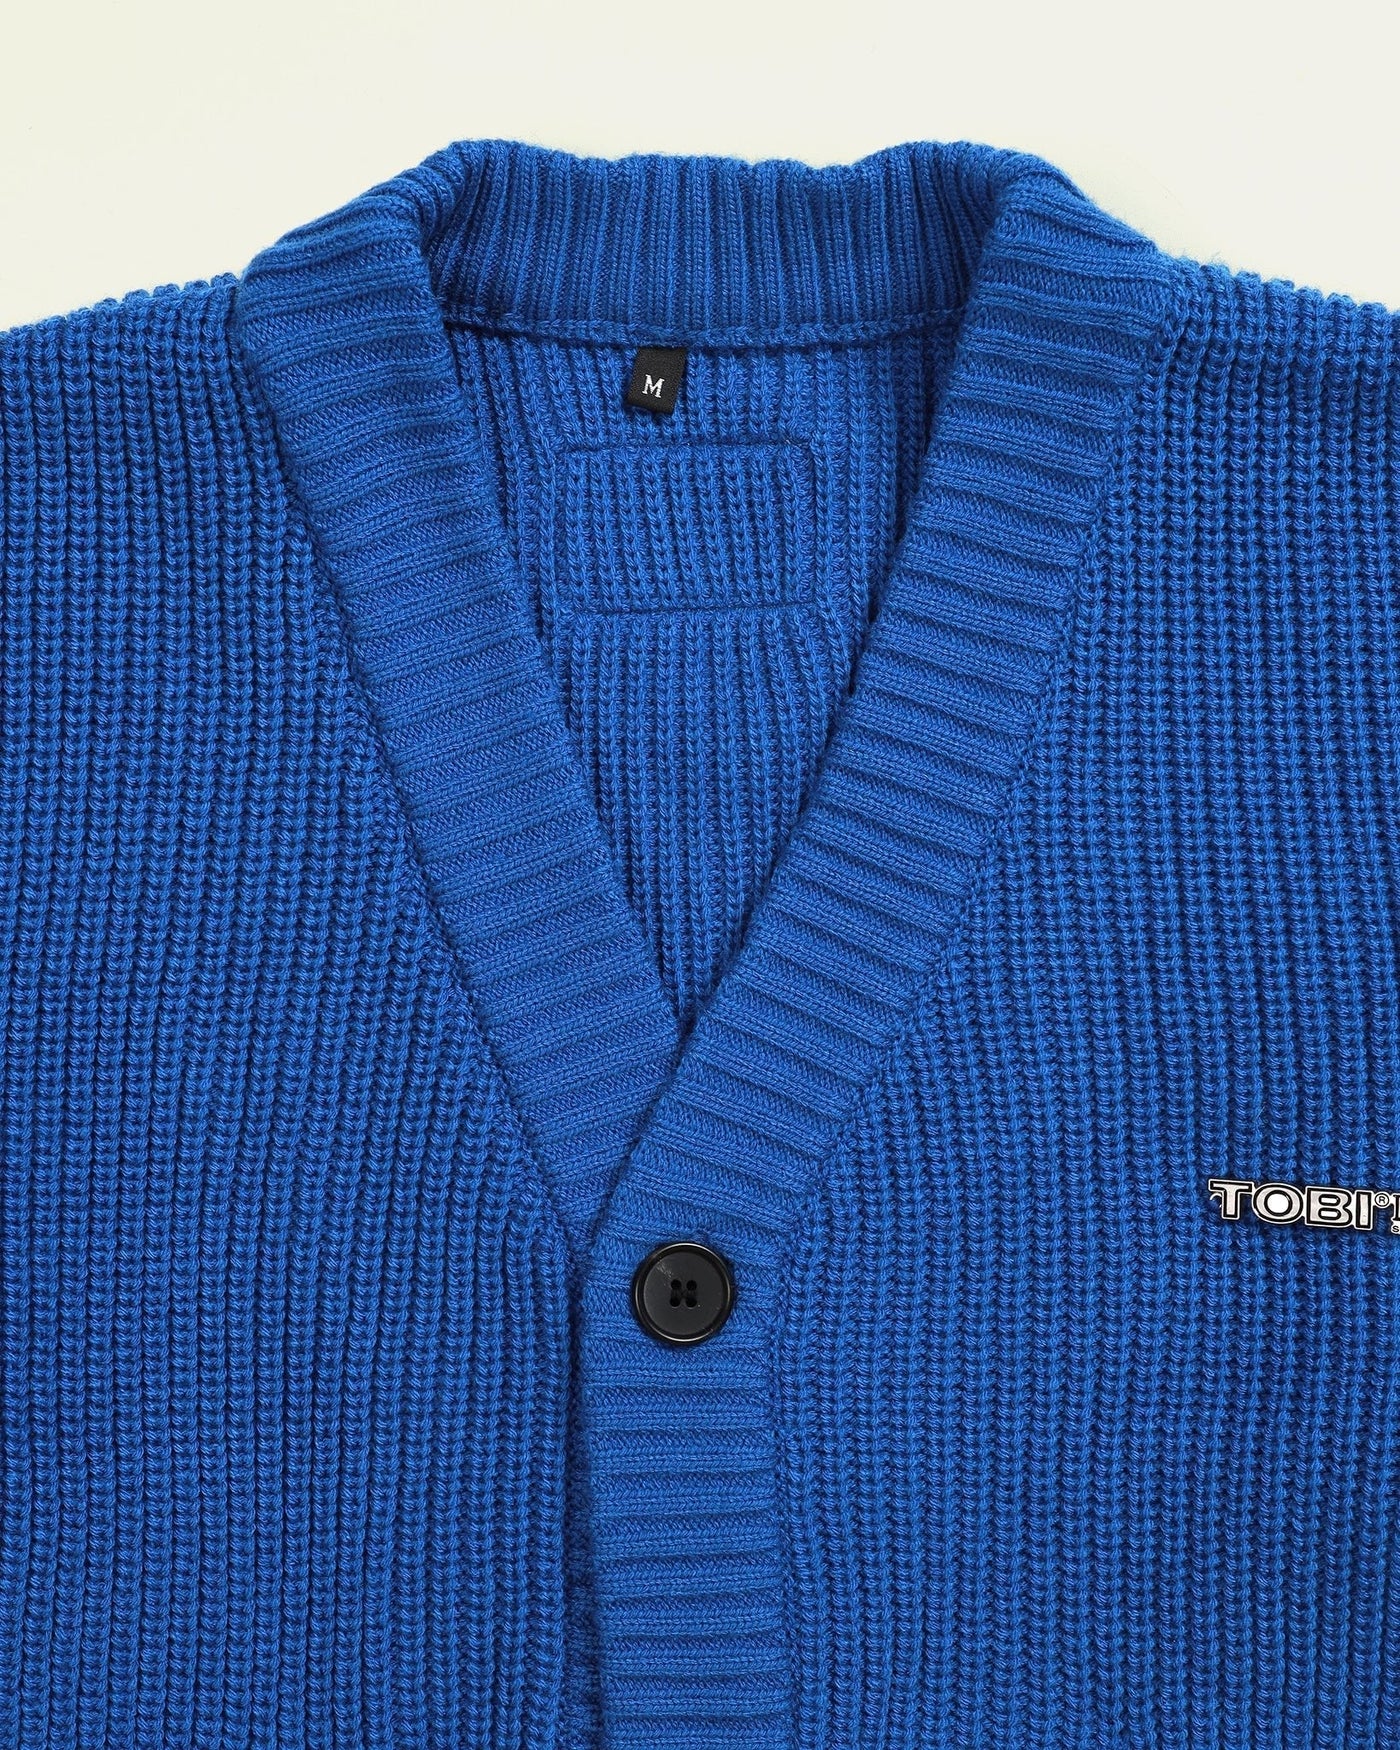 TOBI® Heavy Rib Knit Cardigan - Royal Blue - TOBI